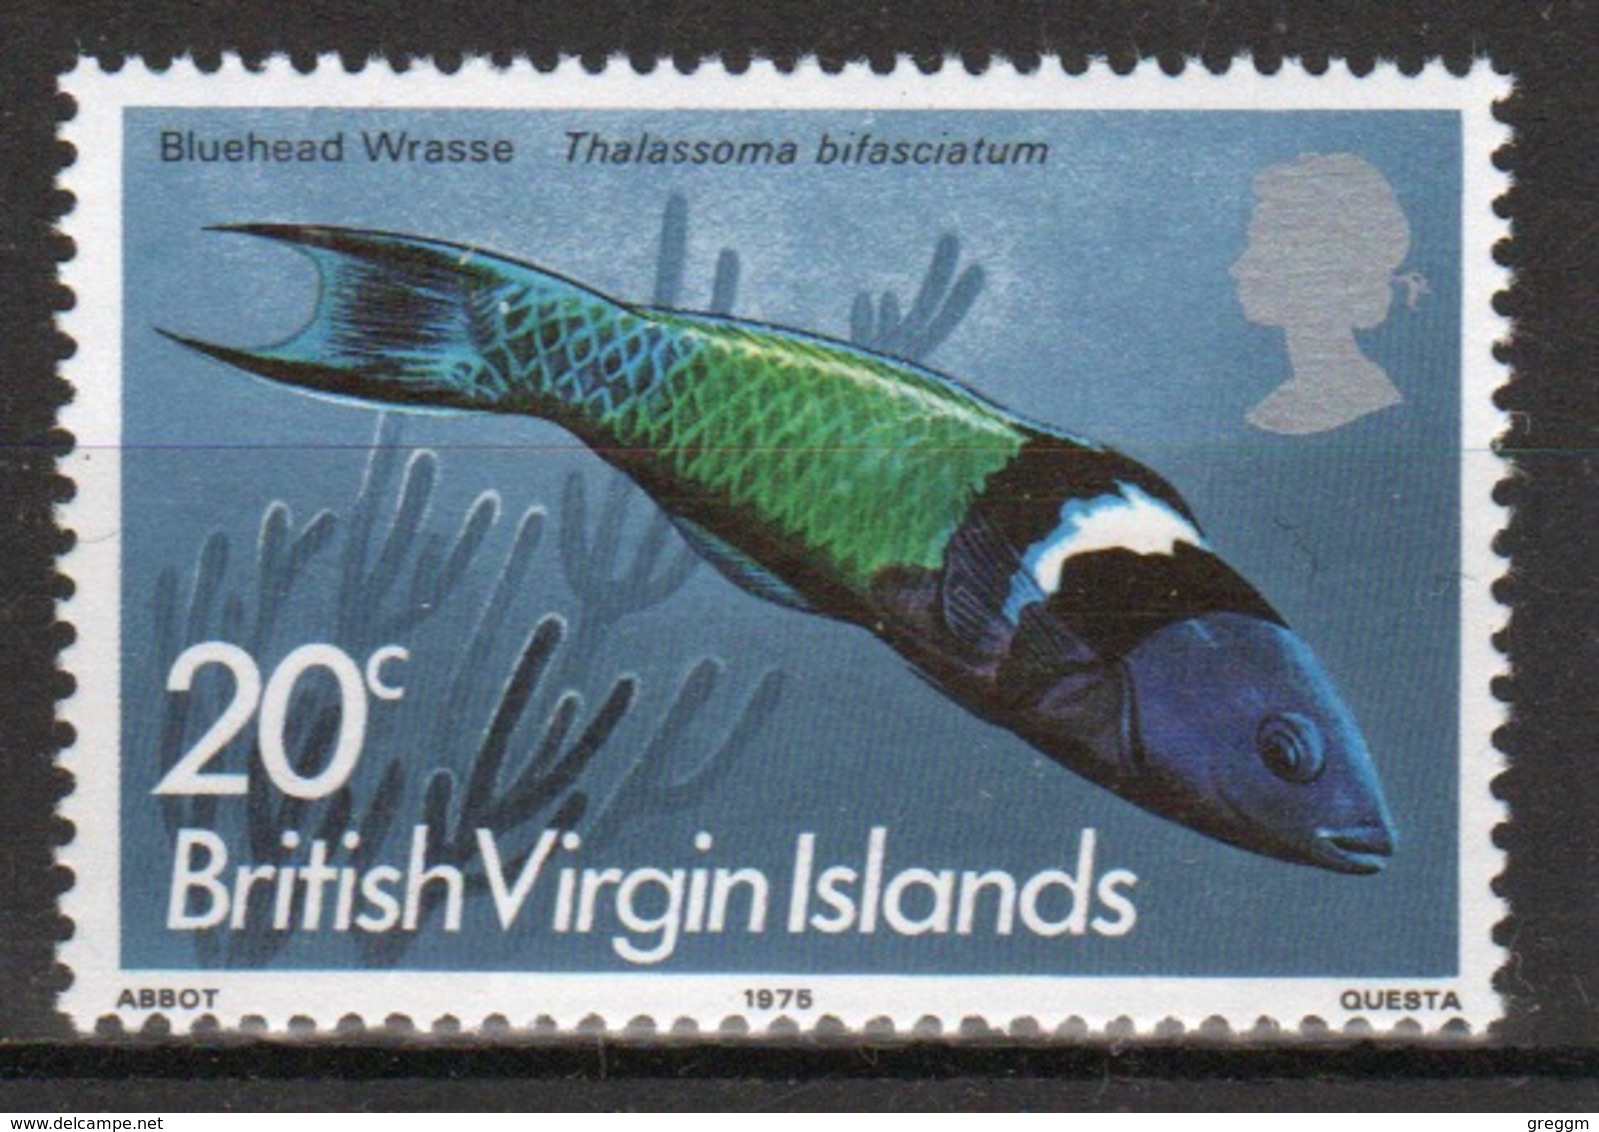 British Virgin Islands 1975 Queen Elizabeth Single 20c Stamp From The 1975 Definitive Fish Set. - British Virgin Islands